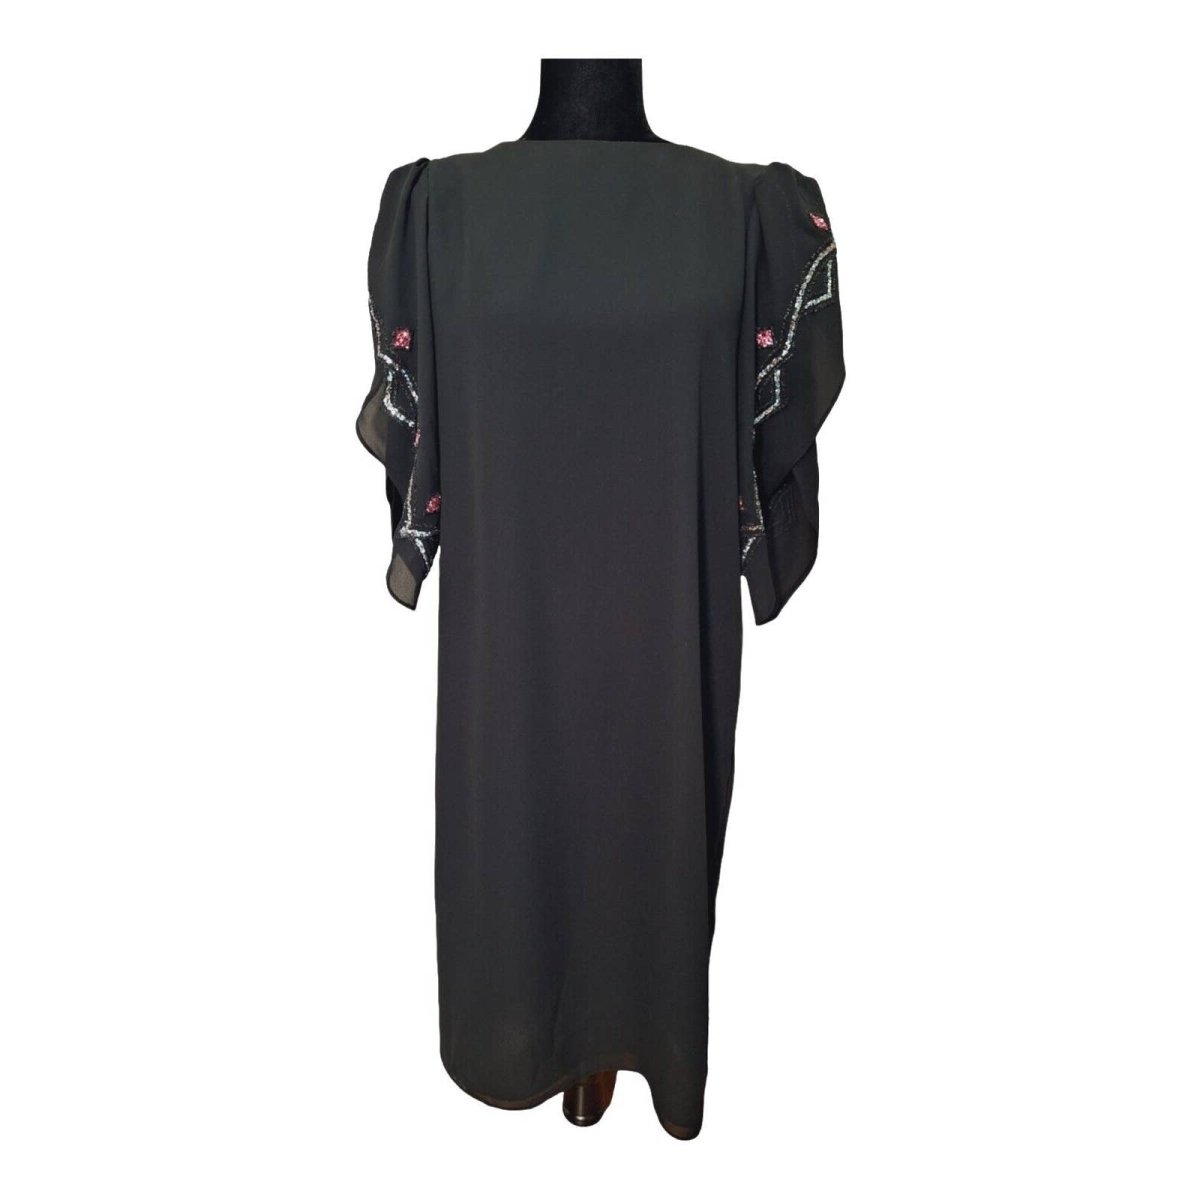 Vintage Black Glitter Sleeve Disco Dress Size Small - themallvintage The Mall Vintage